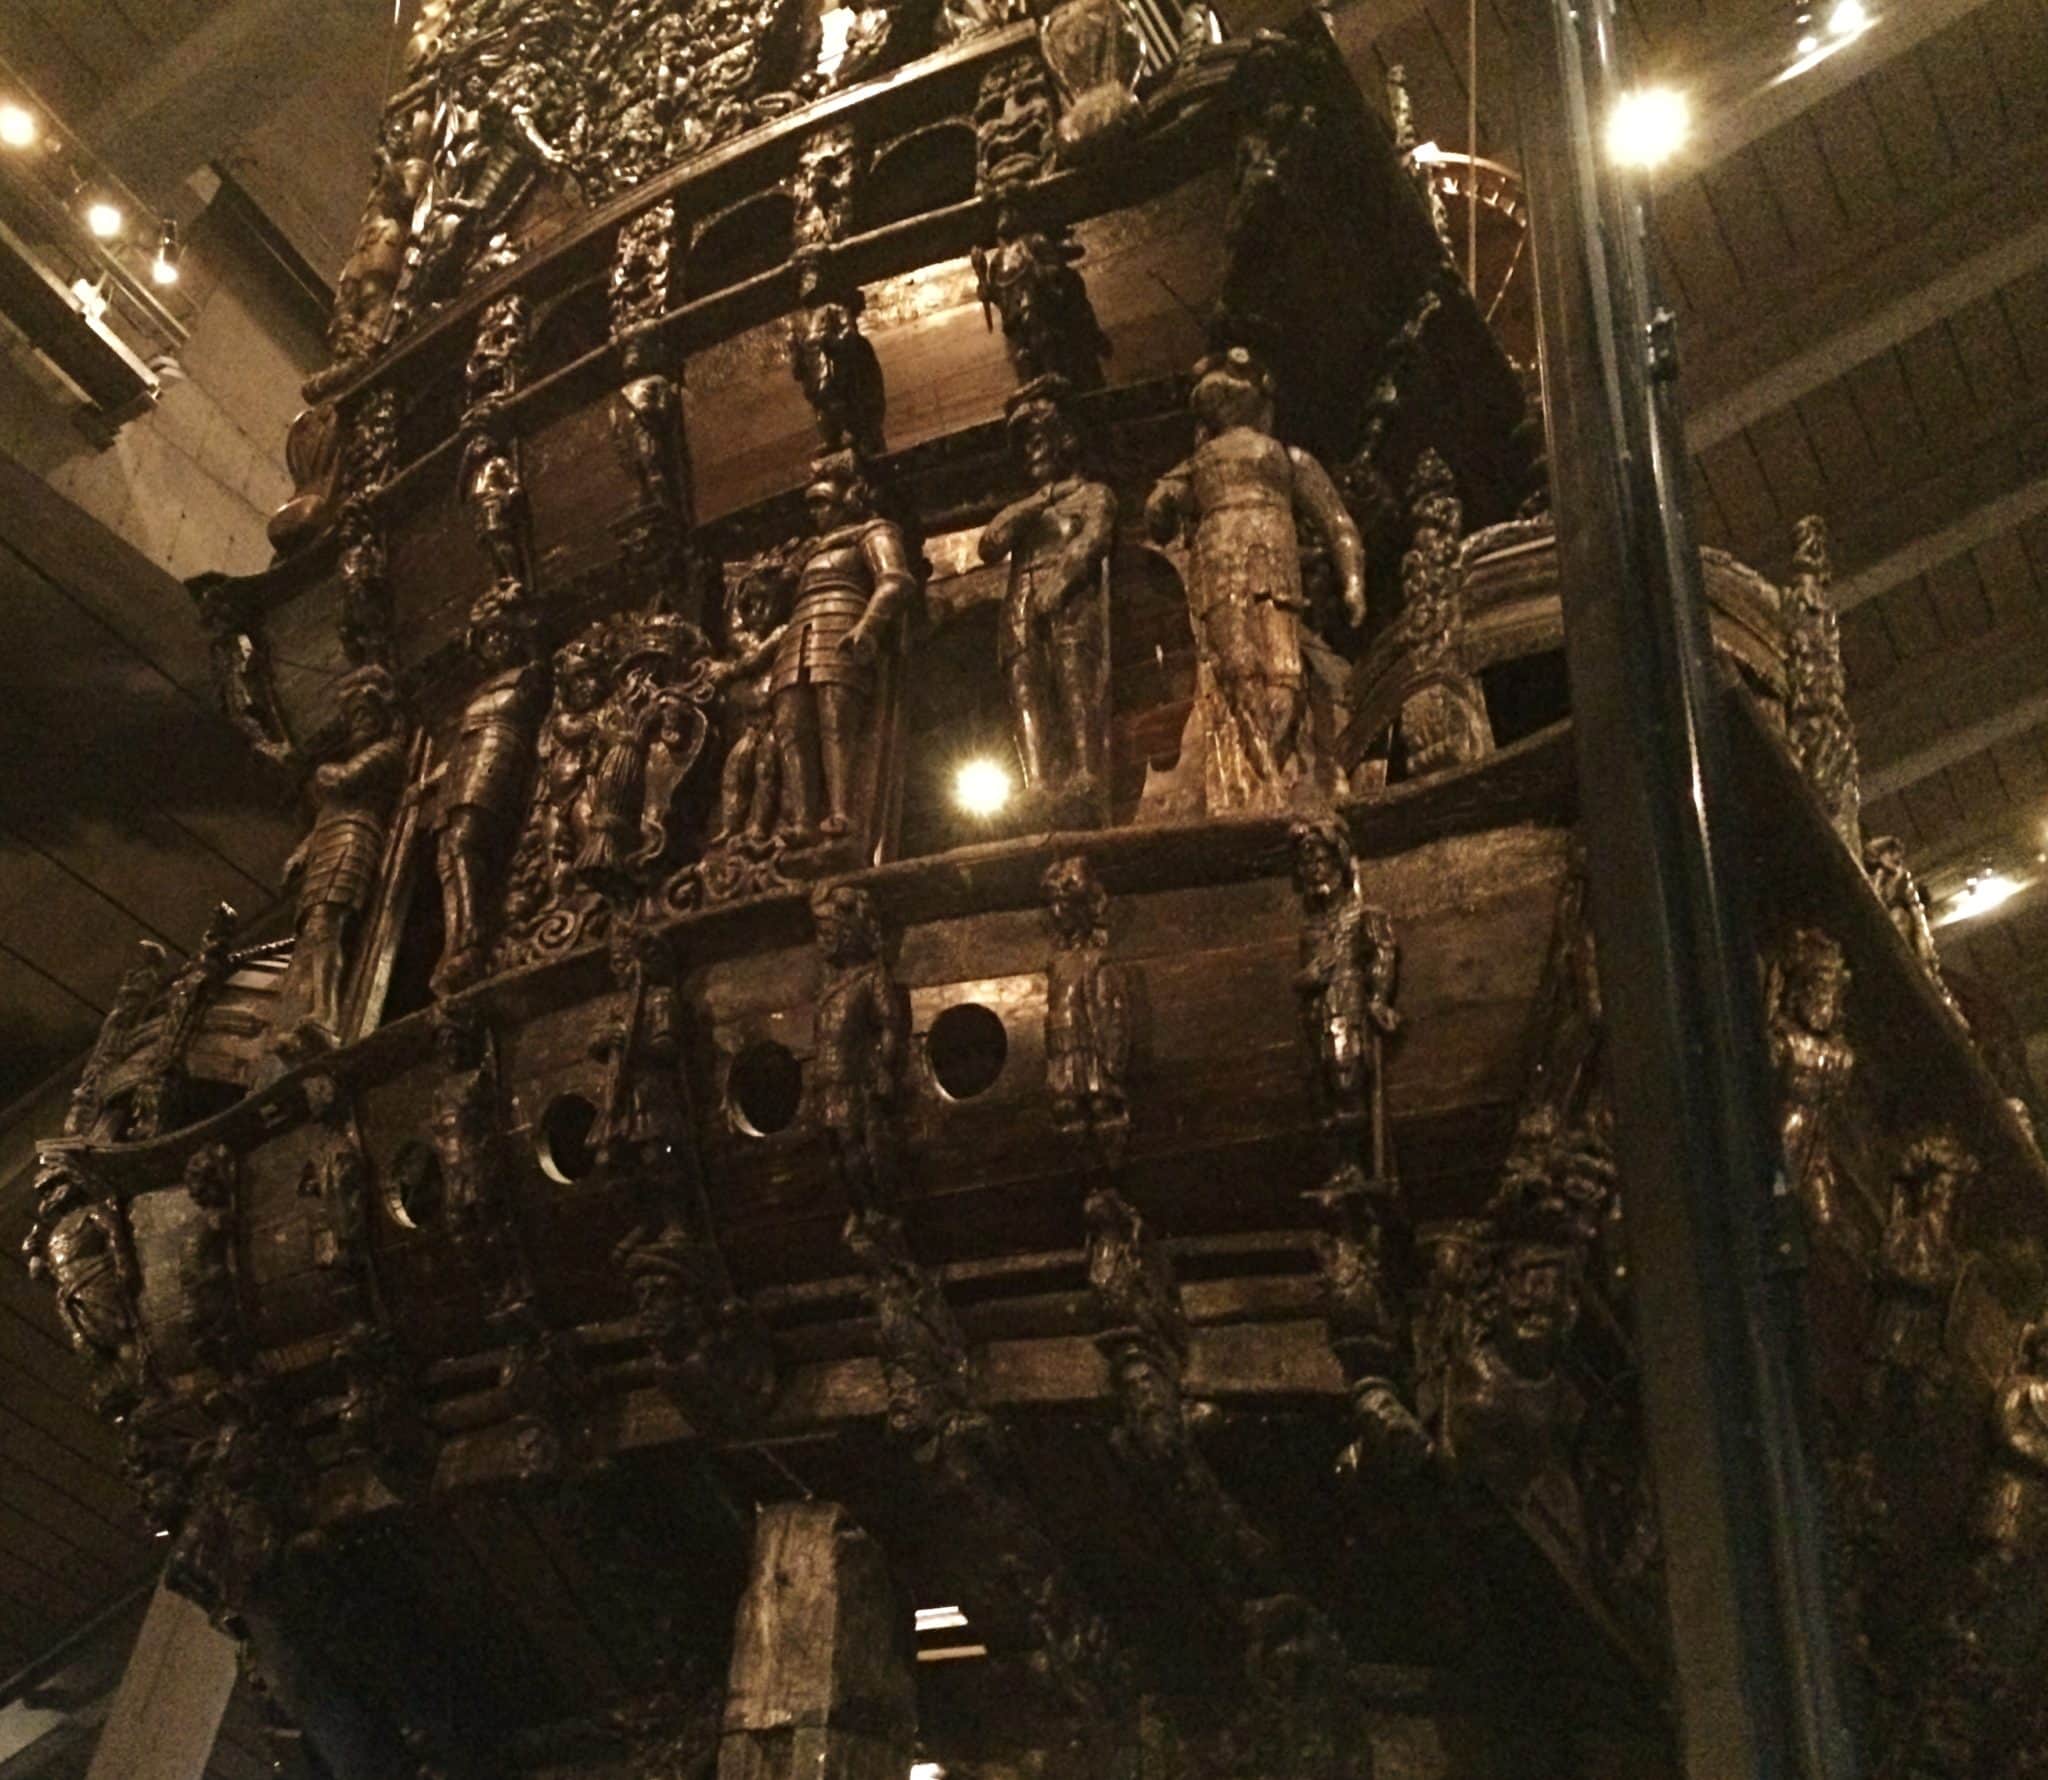 Vasa Ship Museum: Guarding a Mysterious Fate